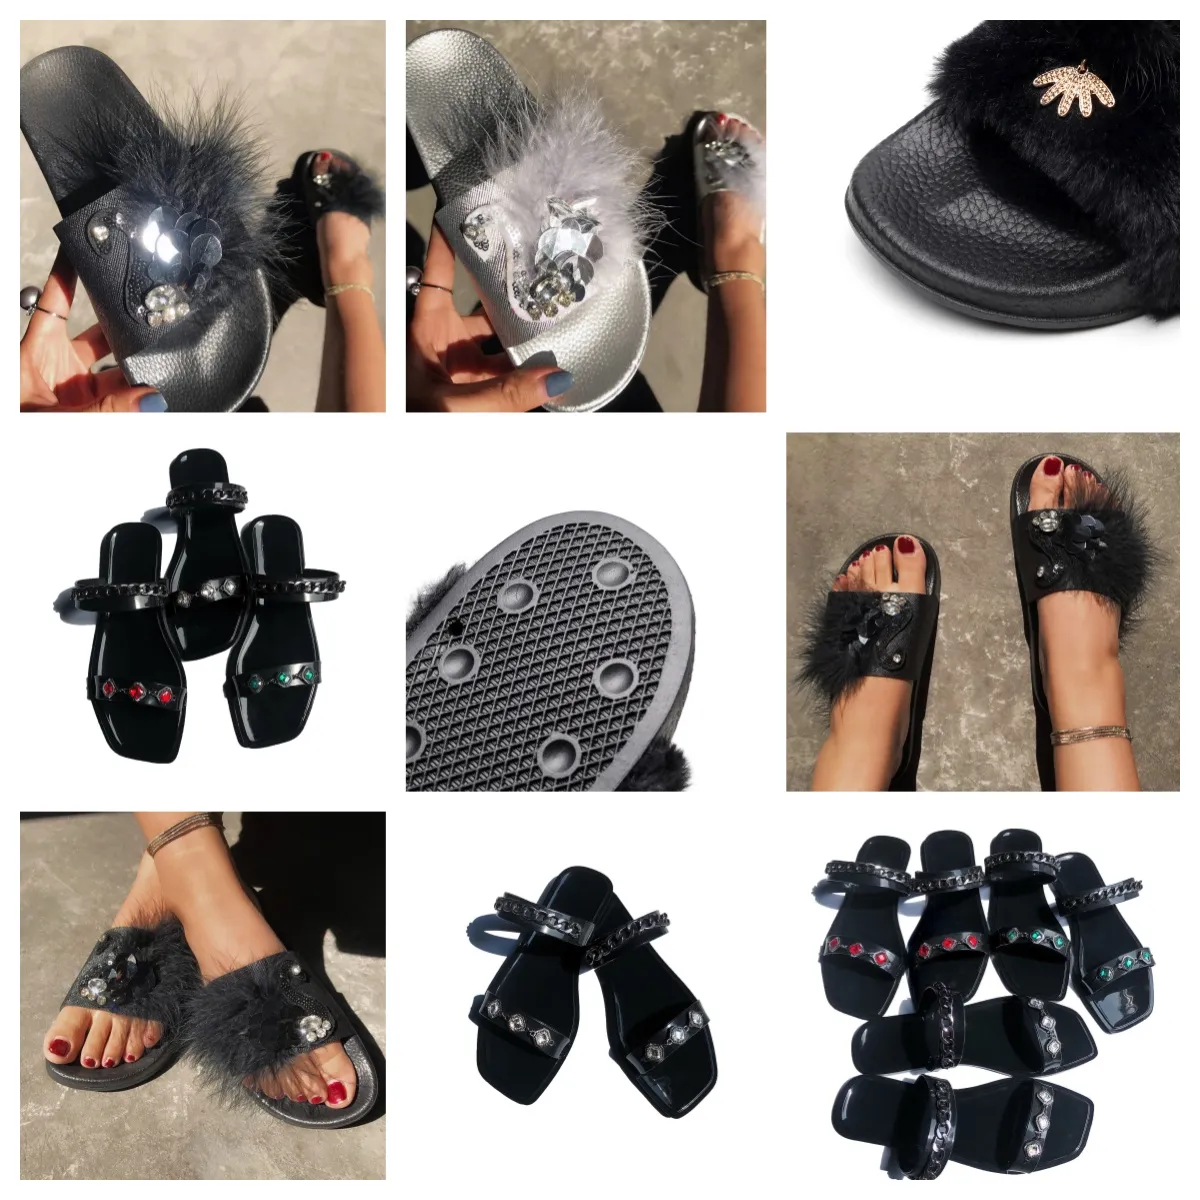 Designer Slide Woman Summer Ladies Beach Sandal Party Wedding Flat Slipper Shoes Fashion Sandal Man and Woman black GAI size 36-41